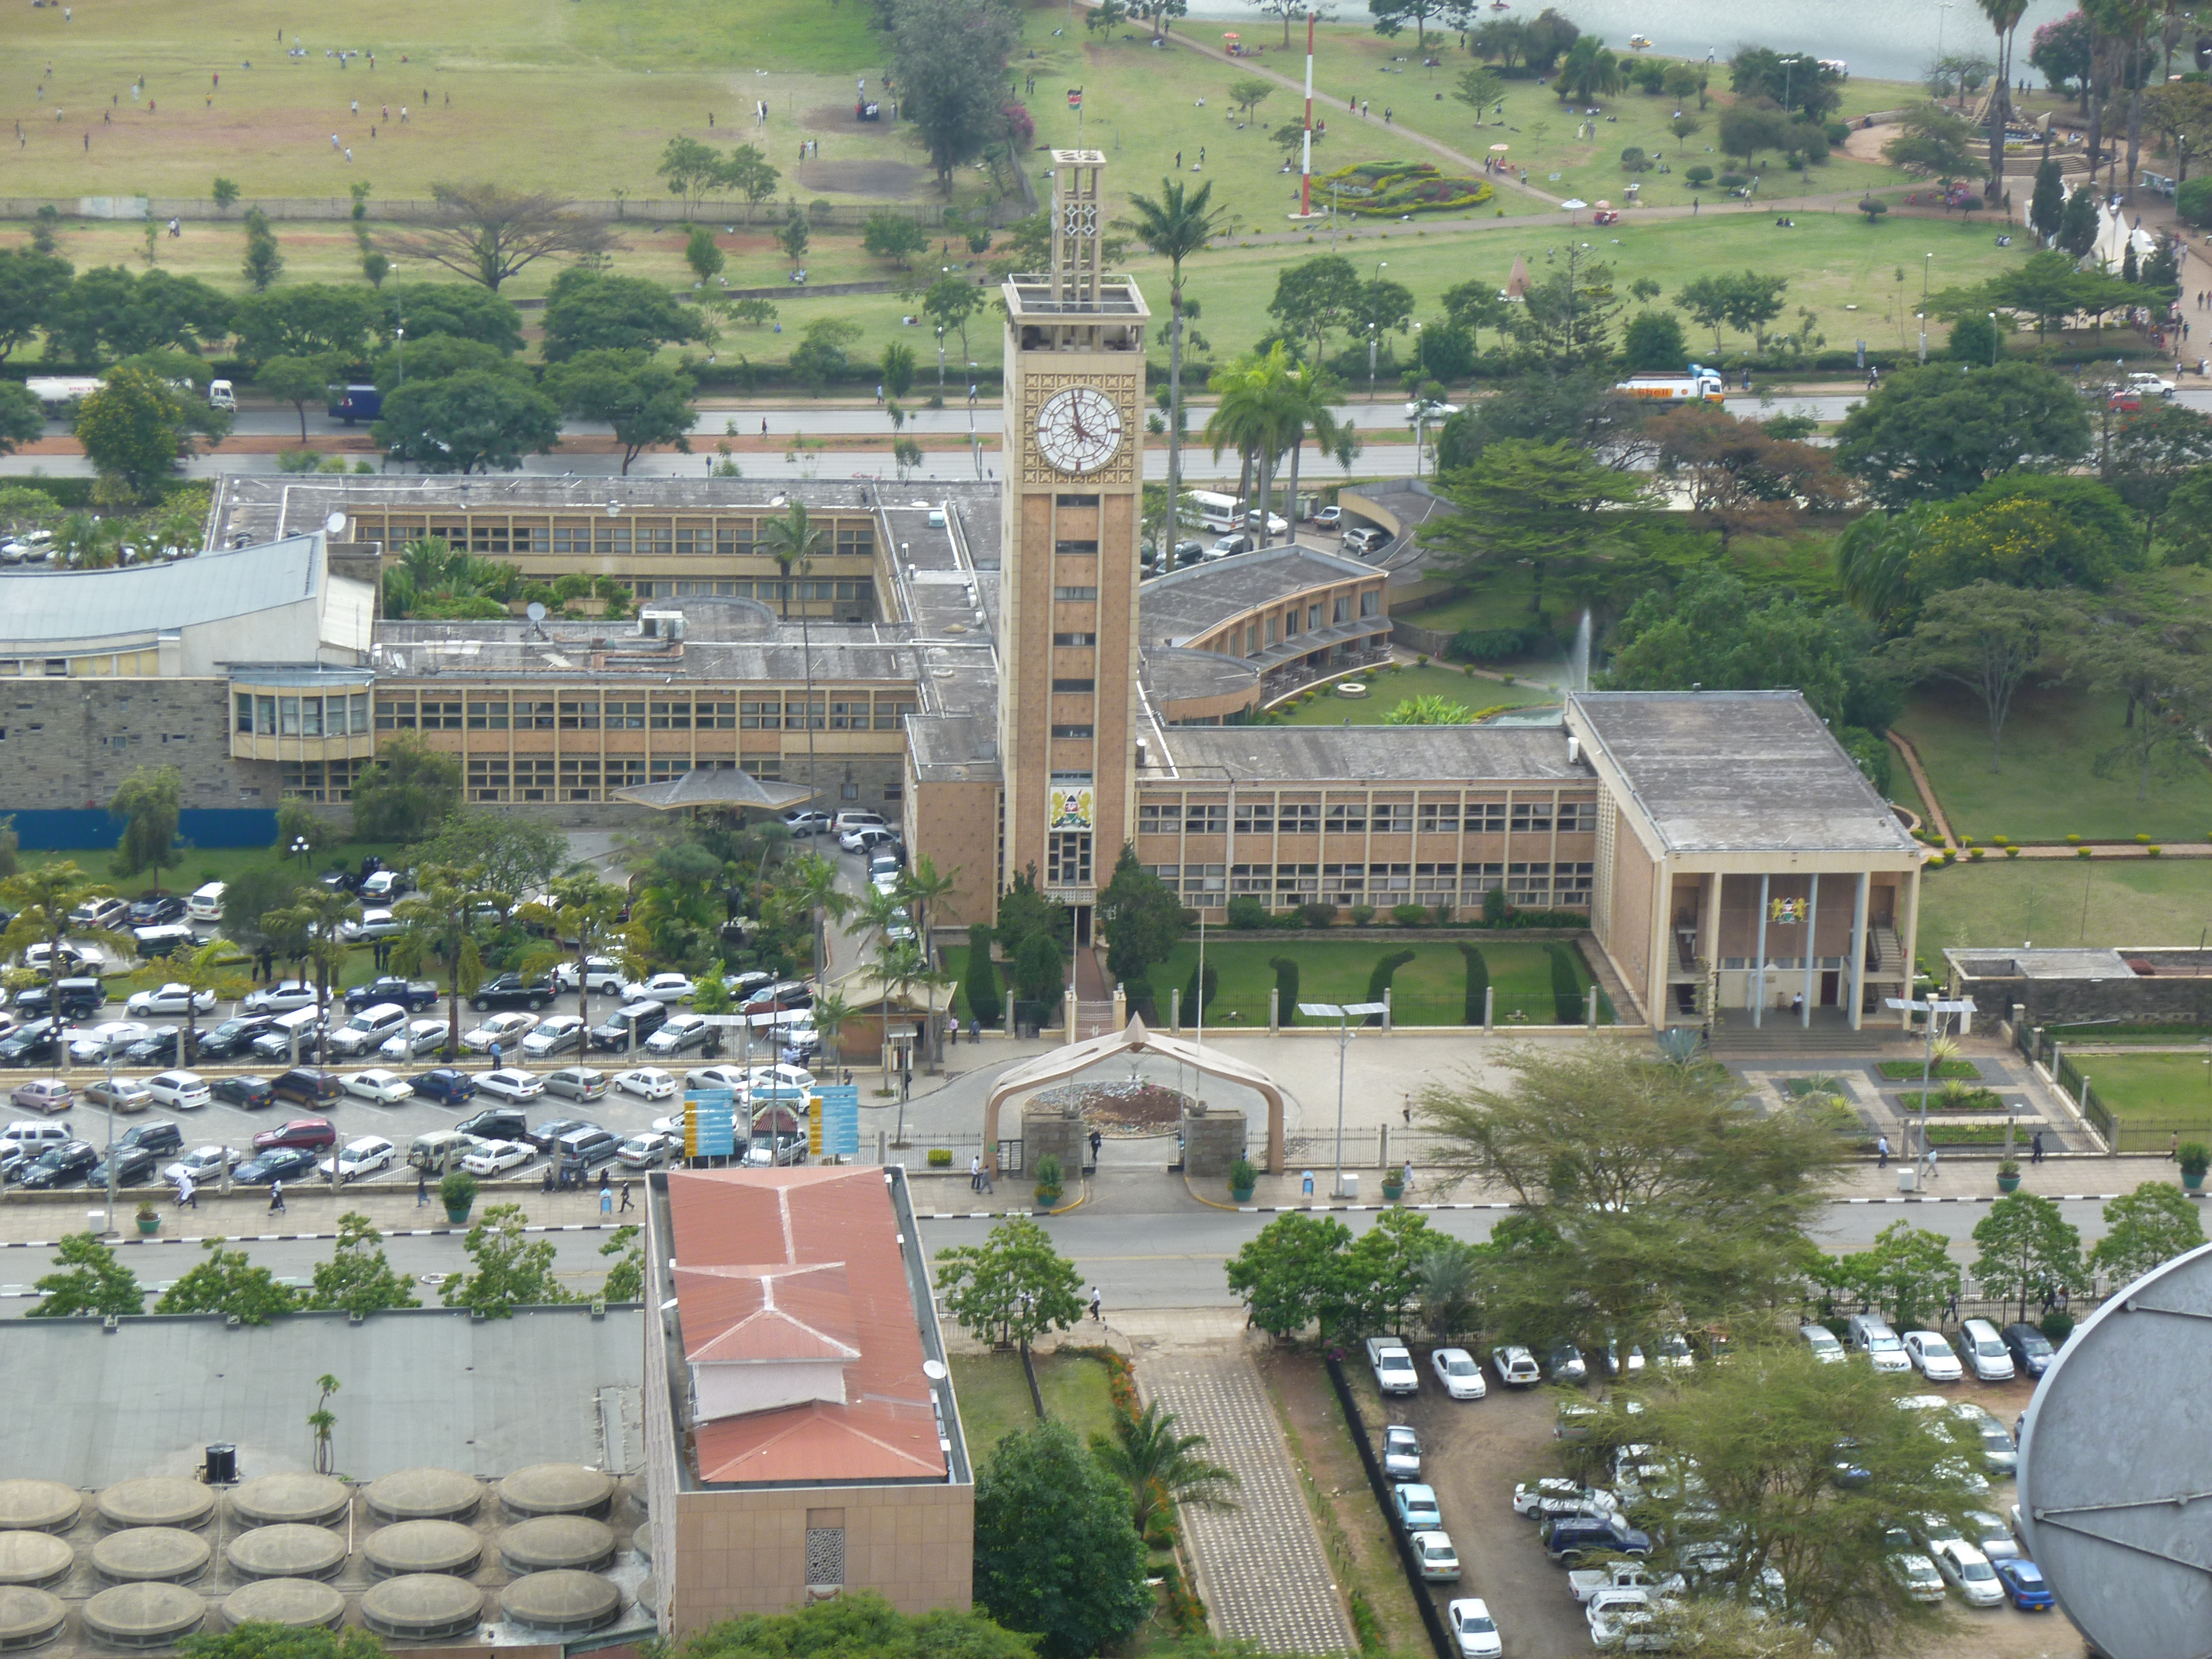 Parliament building in Nairobi, Kenya (photo credit: Richard Portsmouth/flickr)